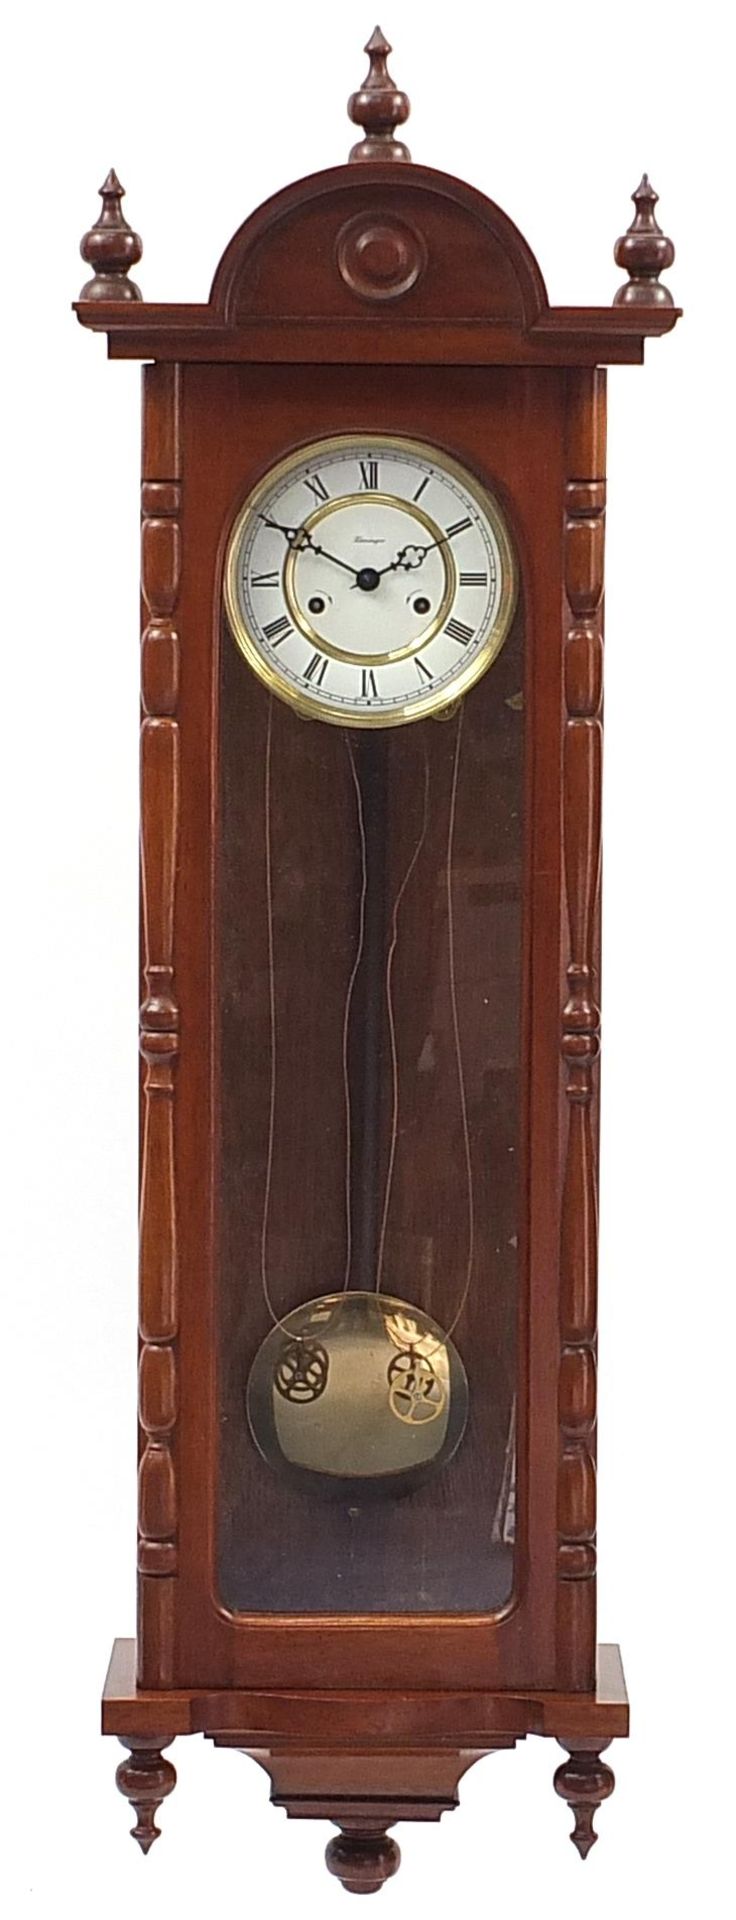 Kieninger, German Vienna Regulator wall clock with visible pendulum and weights, 113cm high